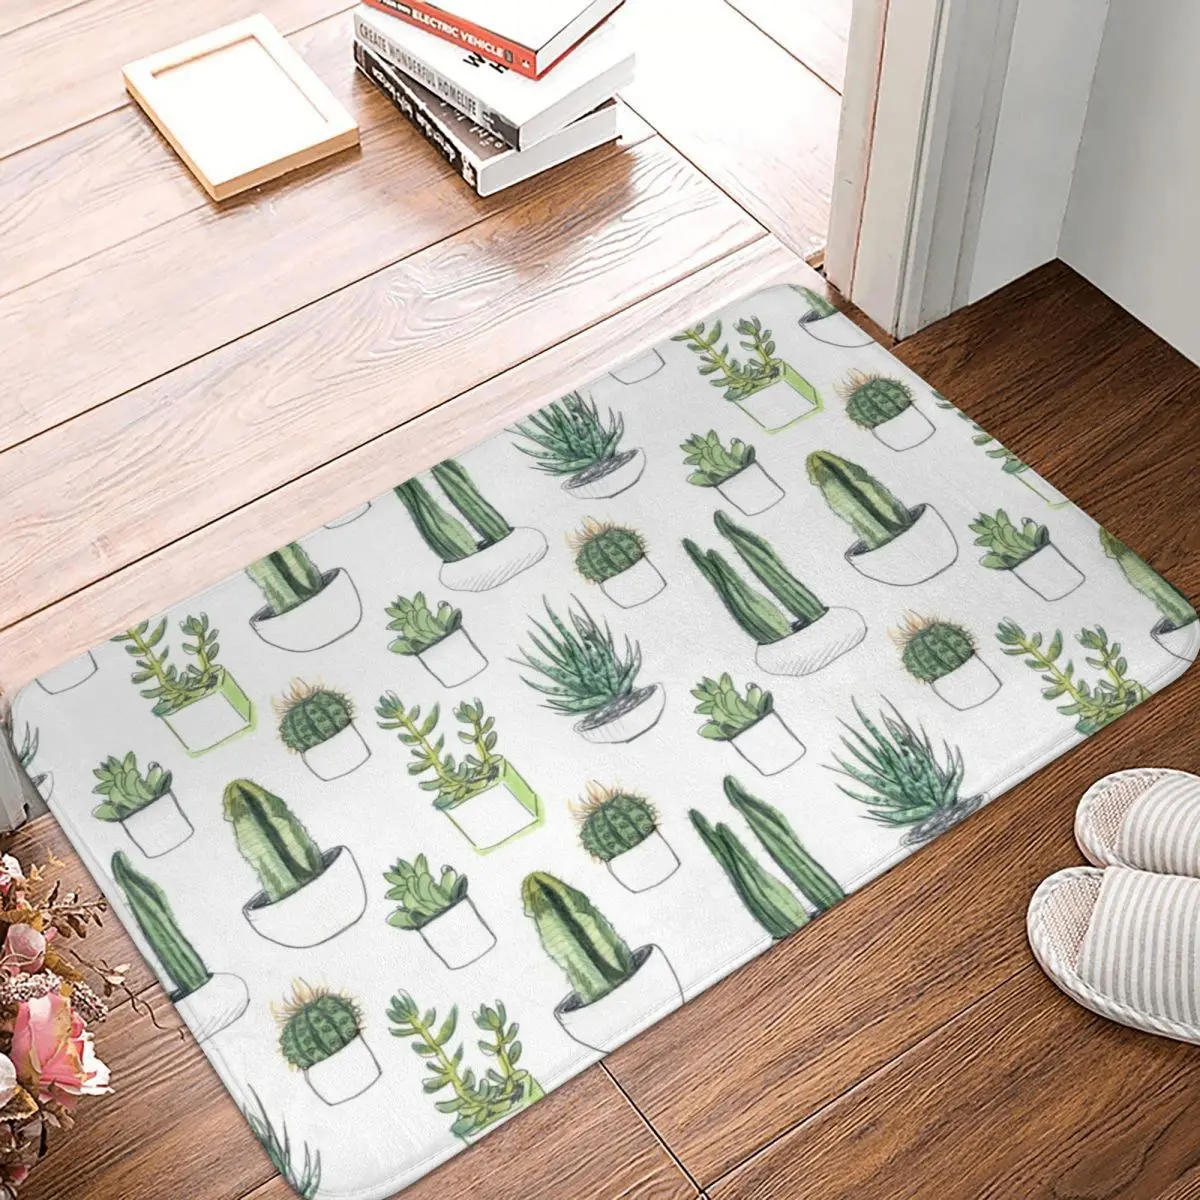 

Watercolour Cacti Succulents Doormat Carpet Mat Rug Polyester Anti-slip Floor Decor Bath Bathroom Kitchen Living Room 40x60